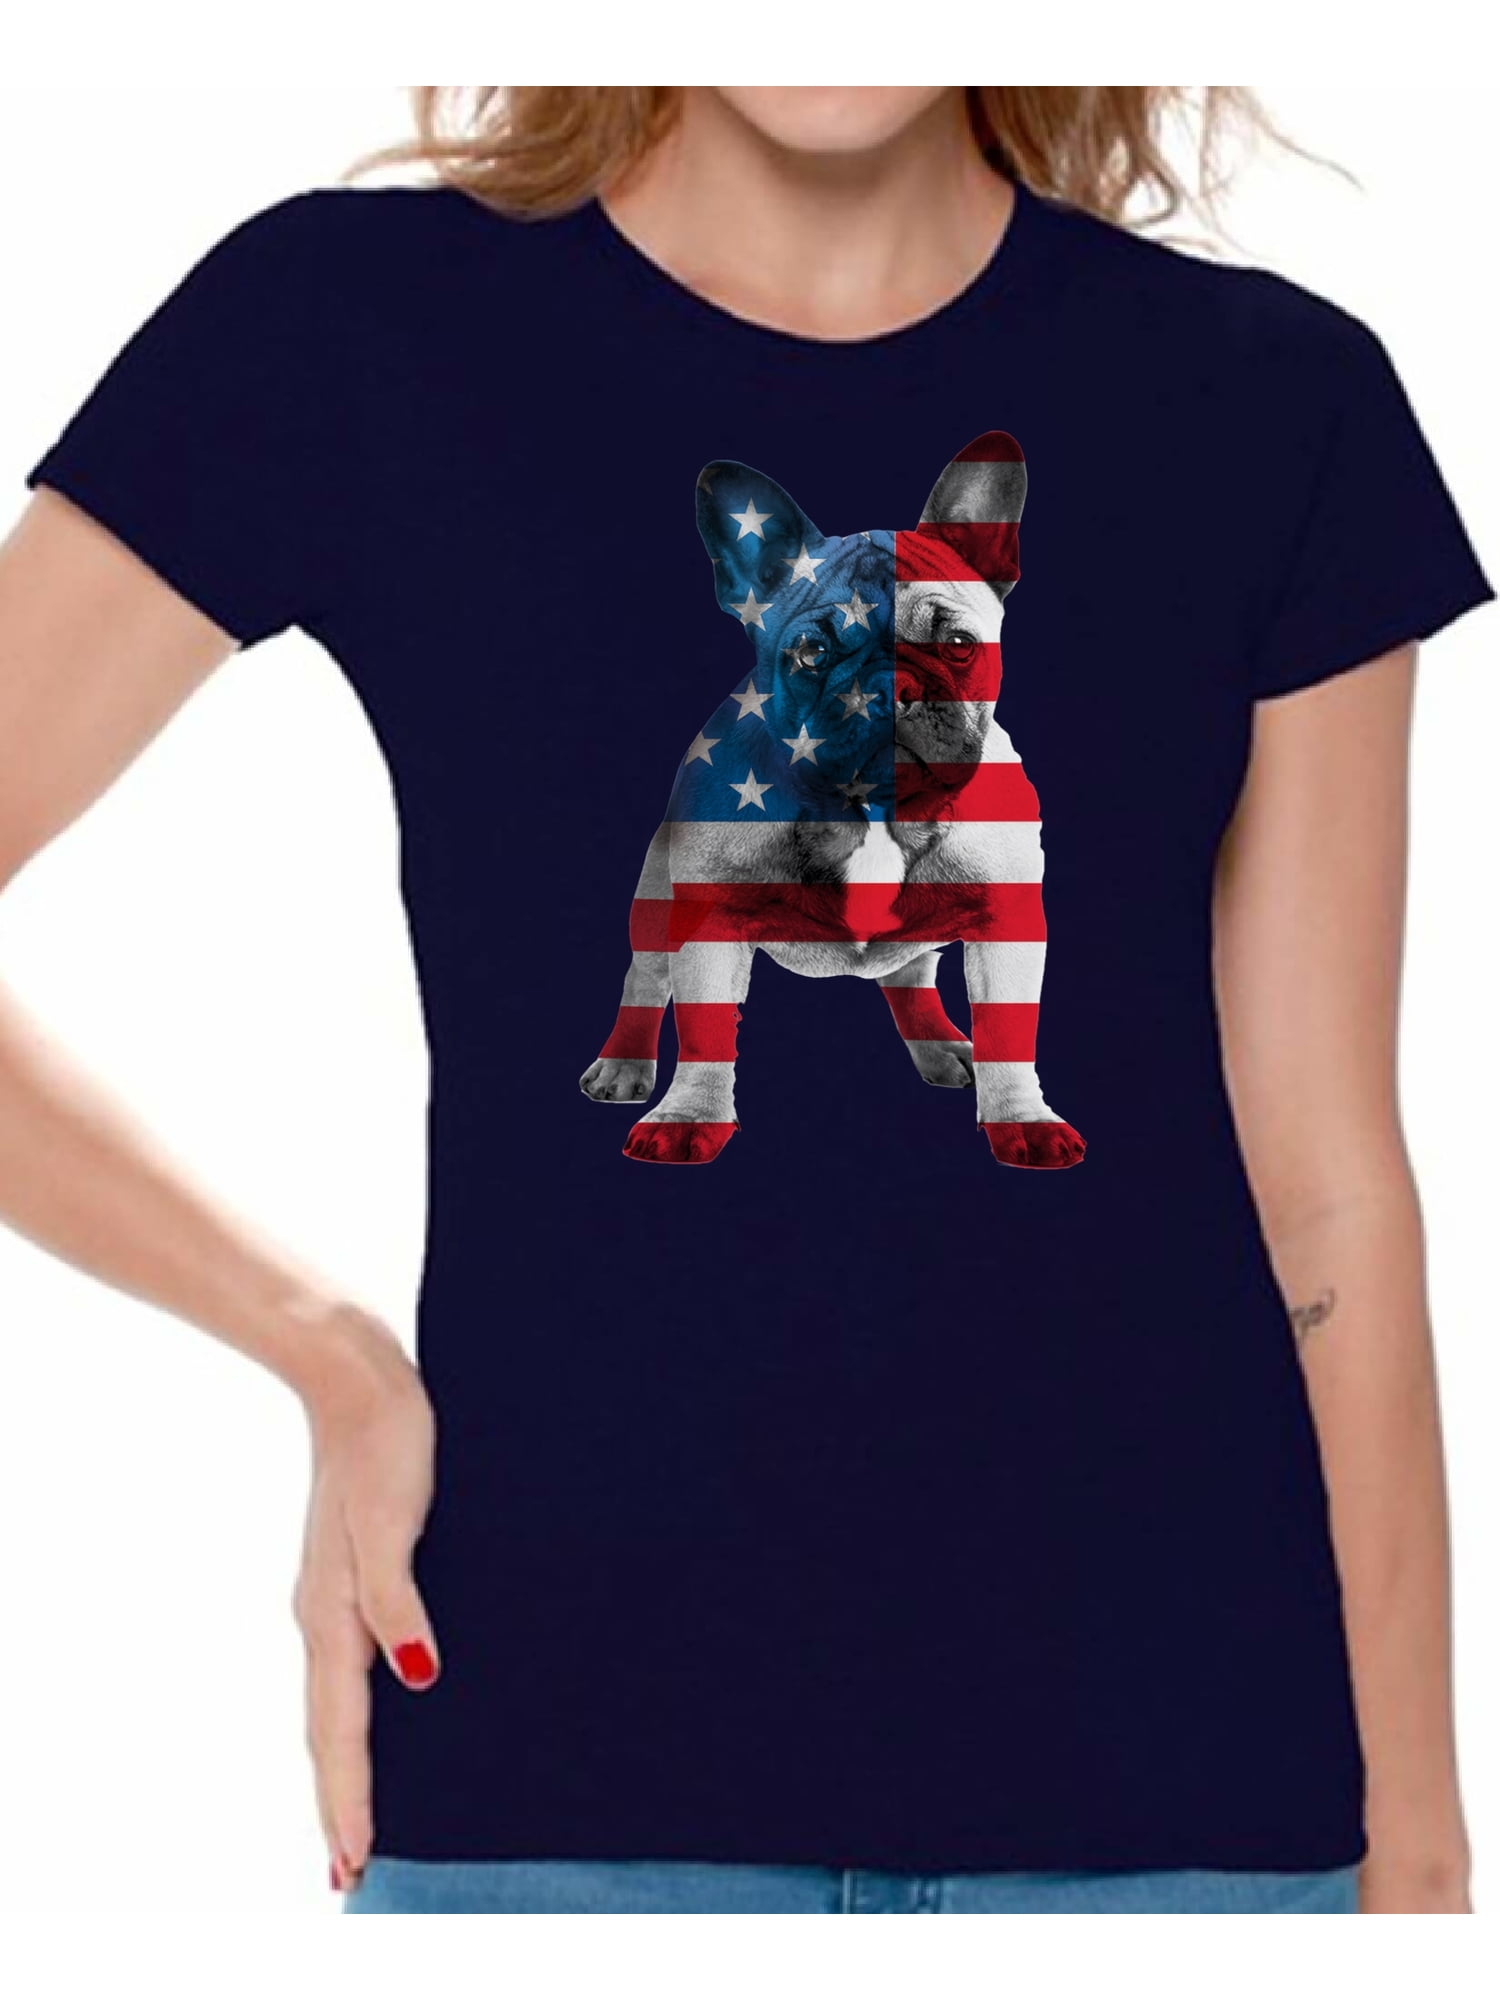 French Bulldog USA Flag Youth Kids T shirt Tops 4th Of July Gift 